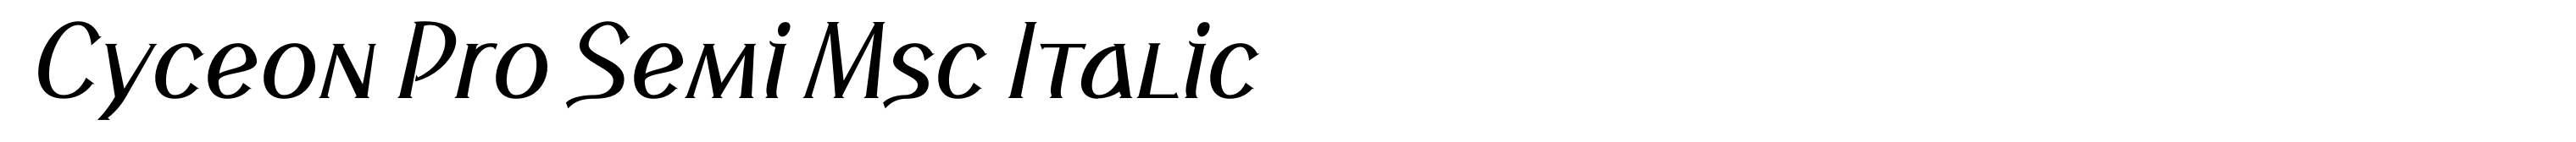 Cyceon Pro Semi Msc Italic